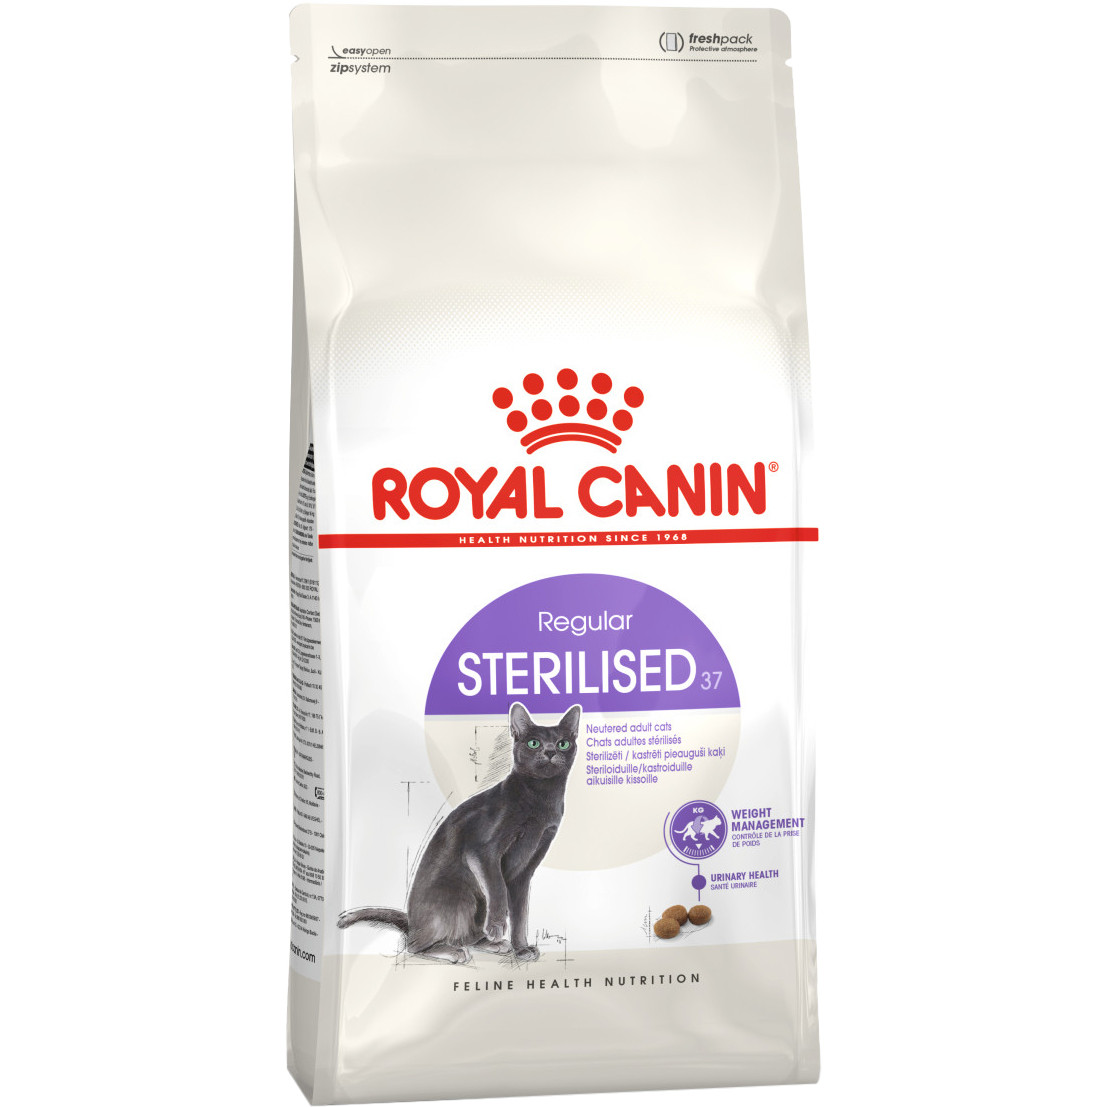 Royal Canin Sterilised 37 4 кг (2537040) - зображення 1